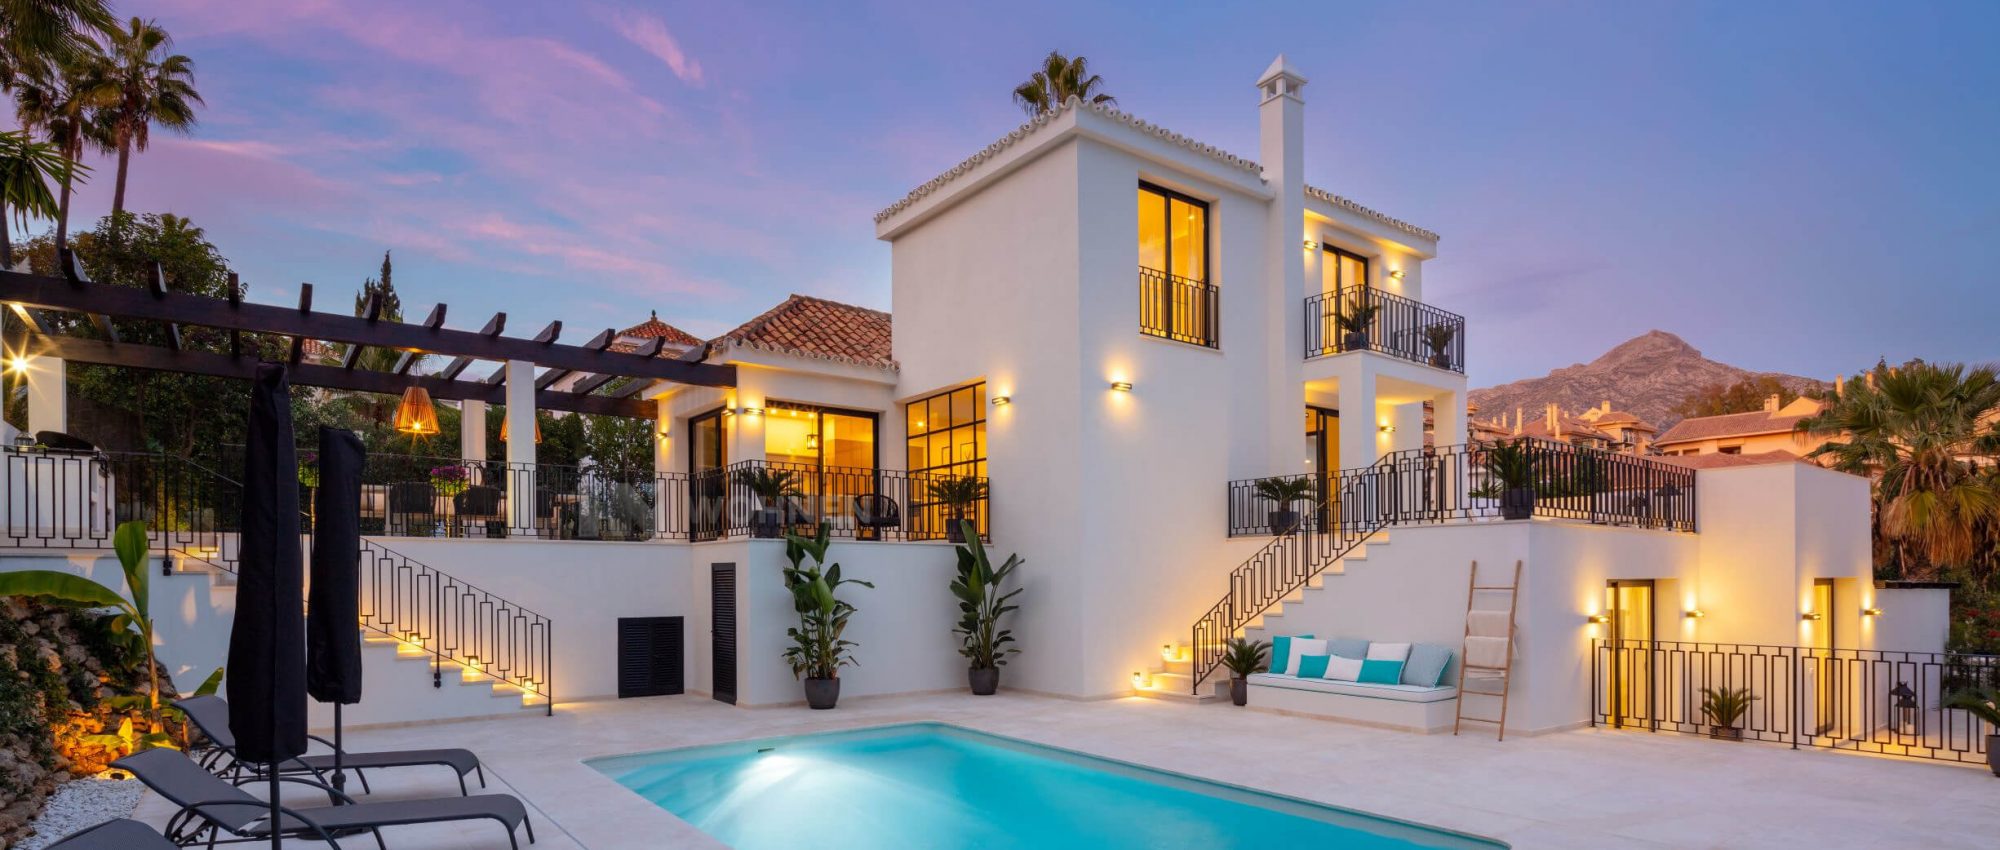 Beautiful villa in a gated community near Puerto Banus and Marbella